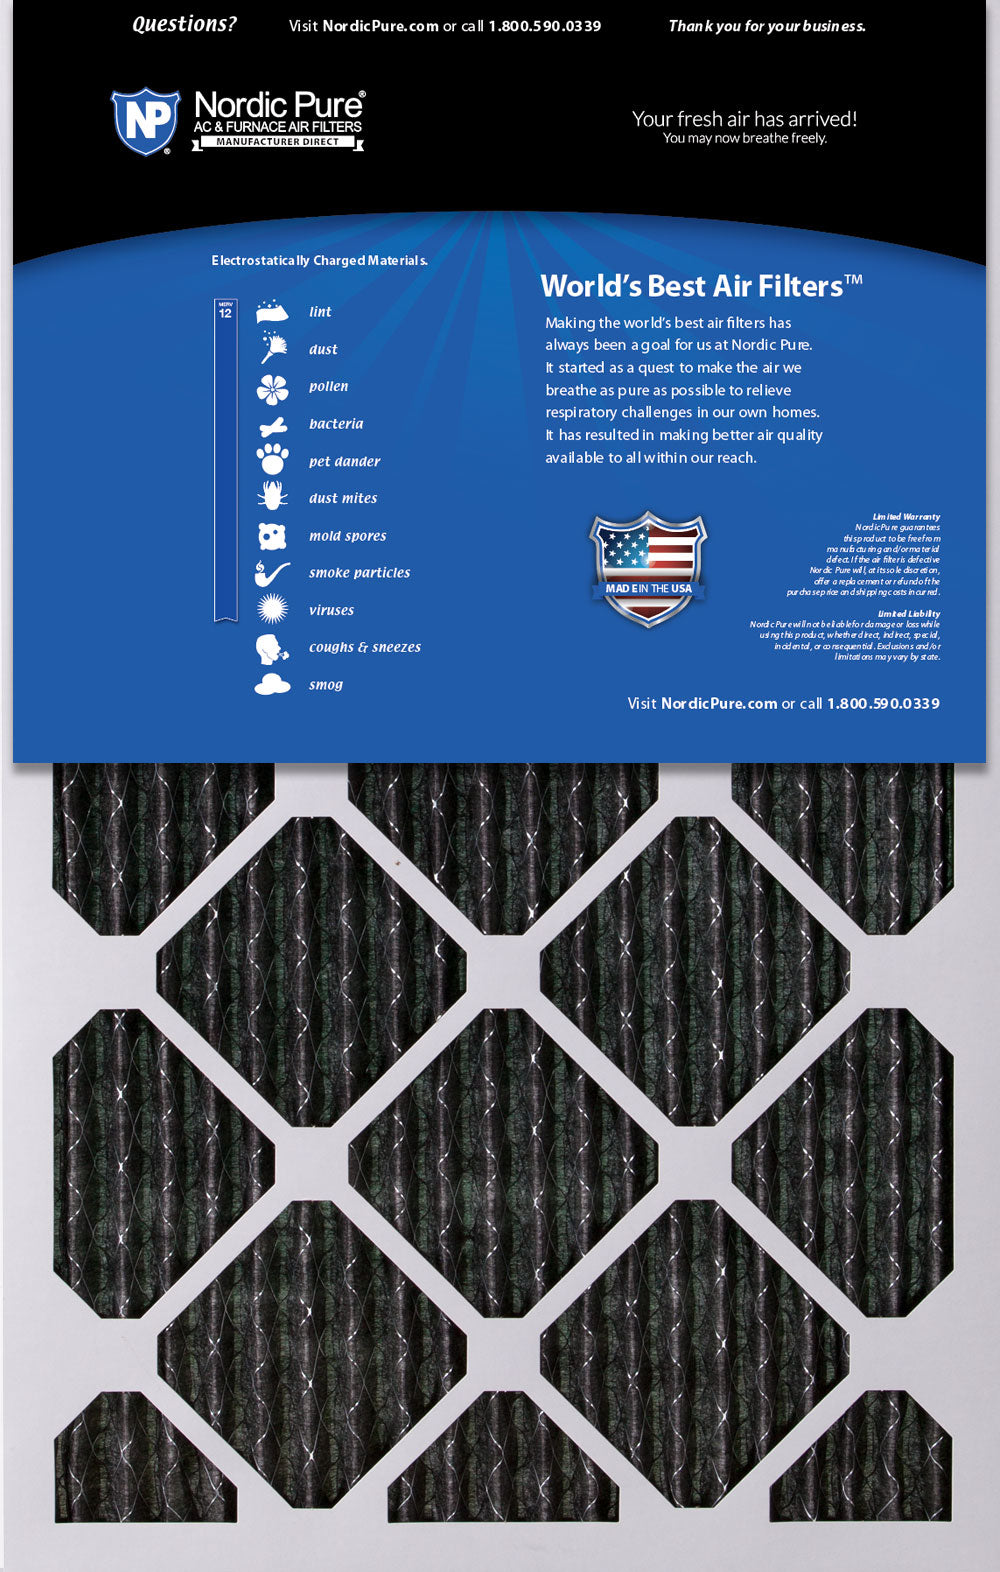 6x16x1 MERV 12 Plus Carbon AC Furnace Filters